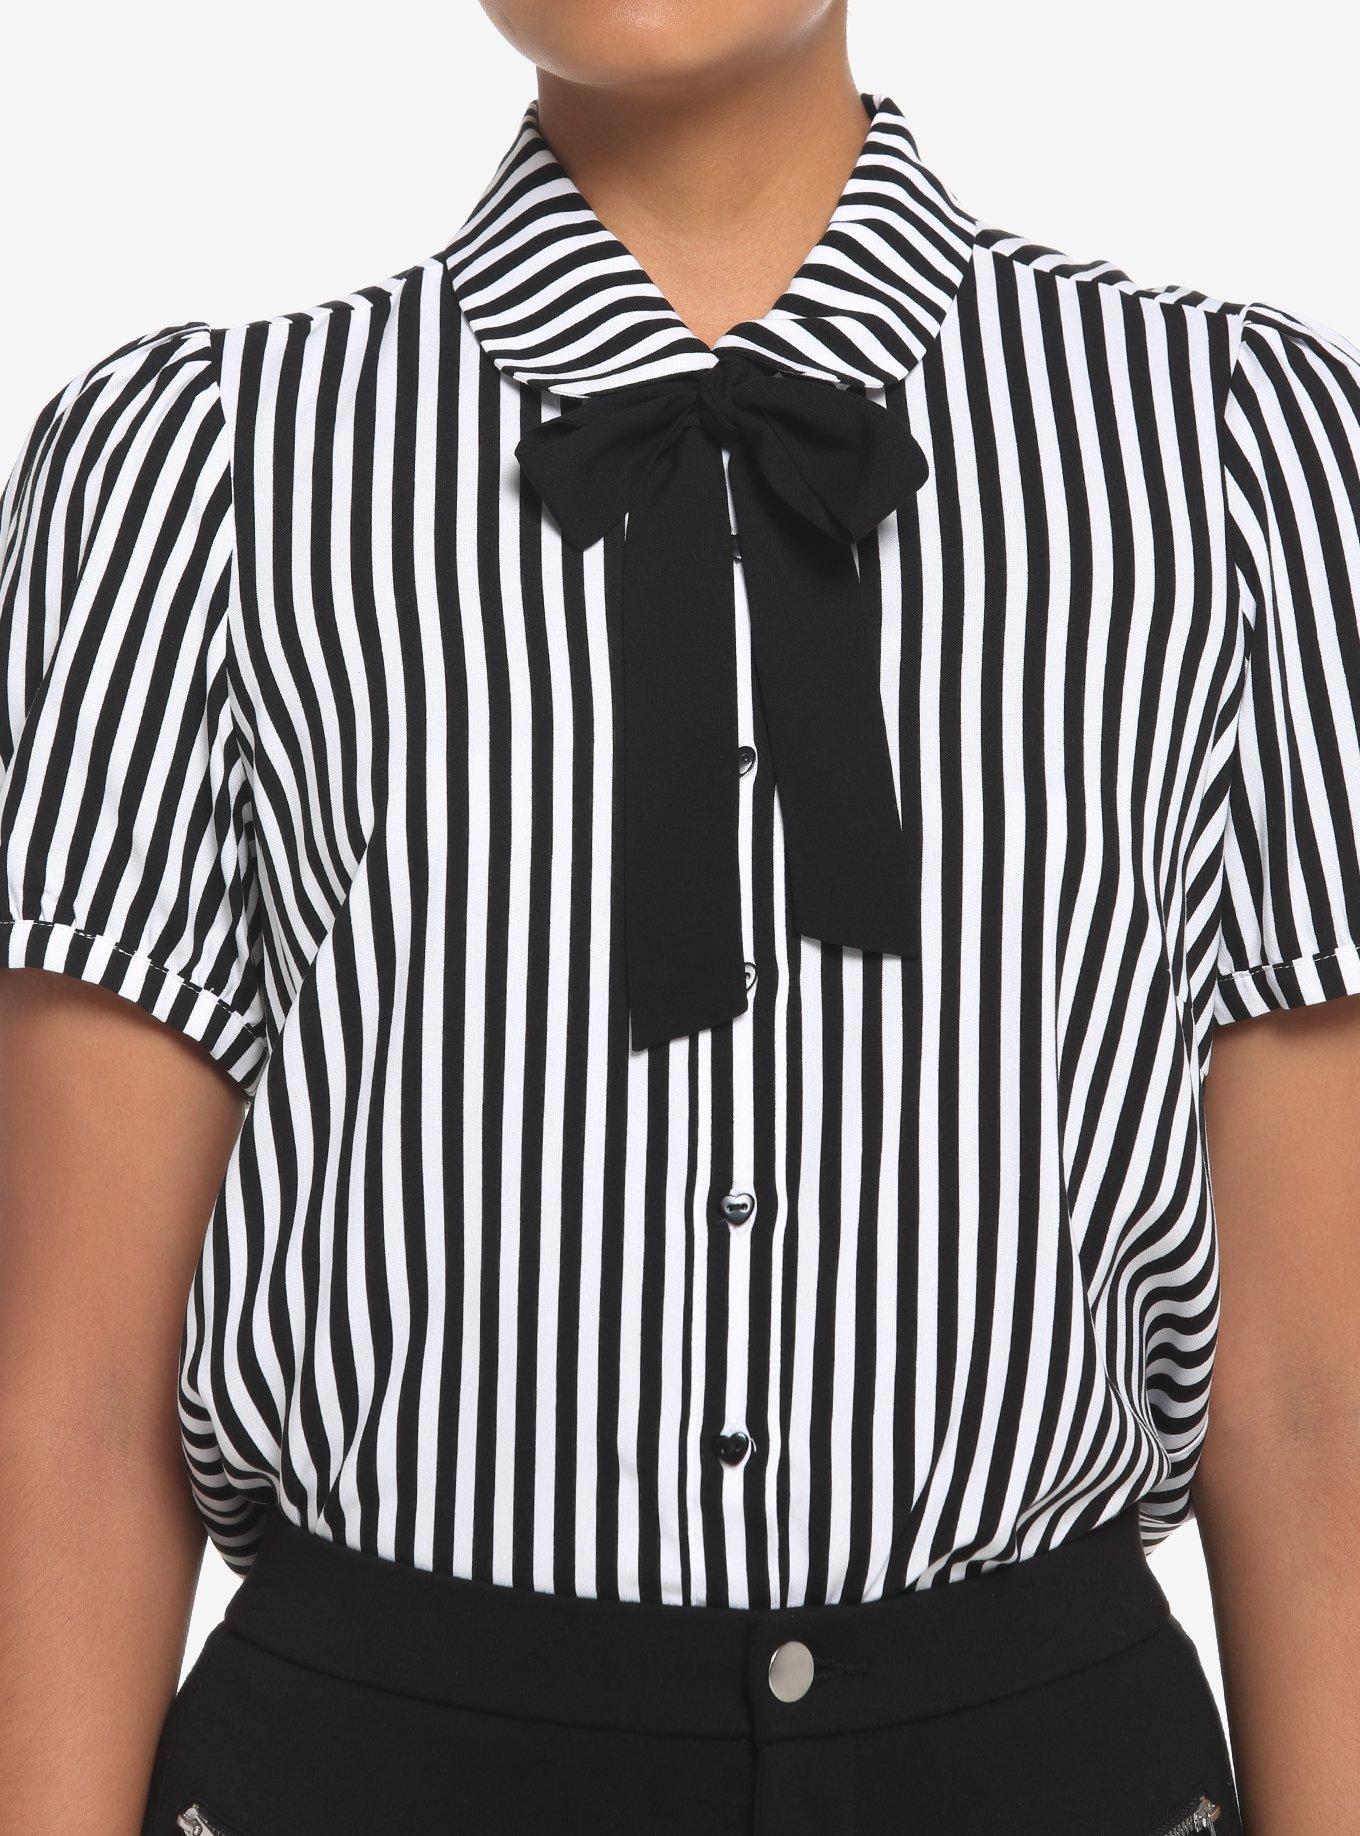 Black & White Pinstripe Bow Girls Woven Button-Up, STRIPE-BLACK WHITE, hi-res